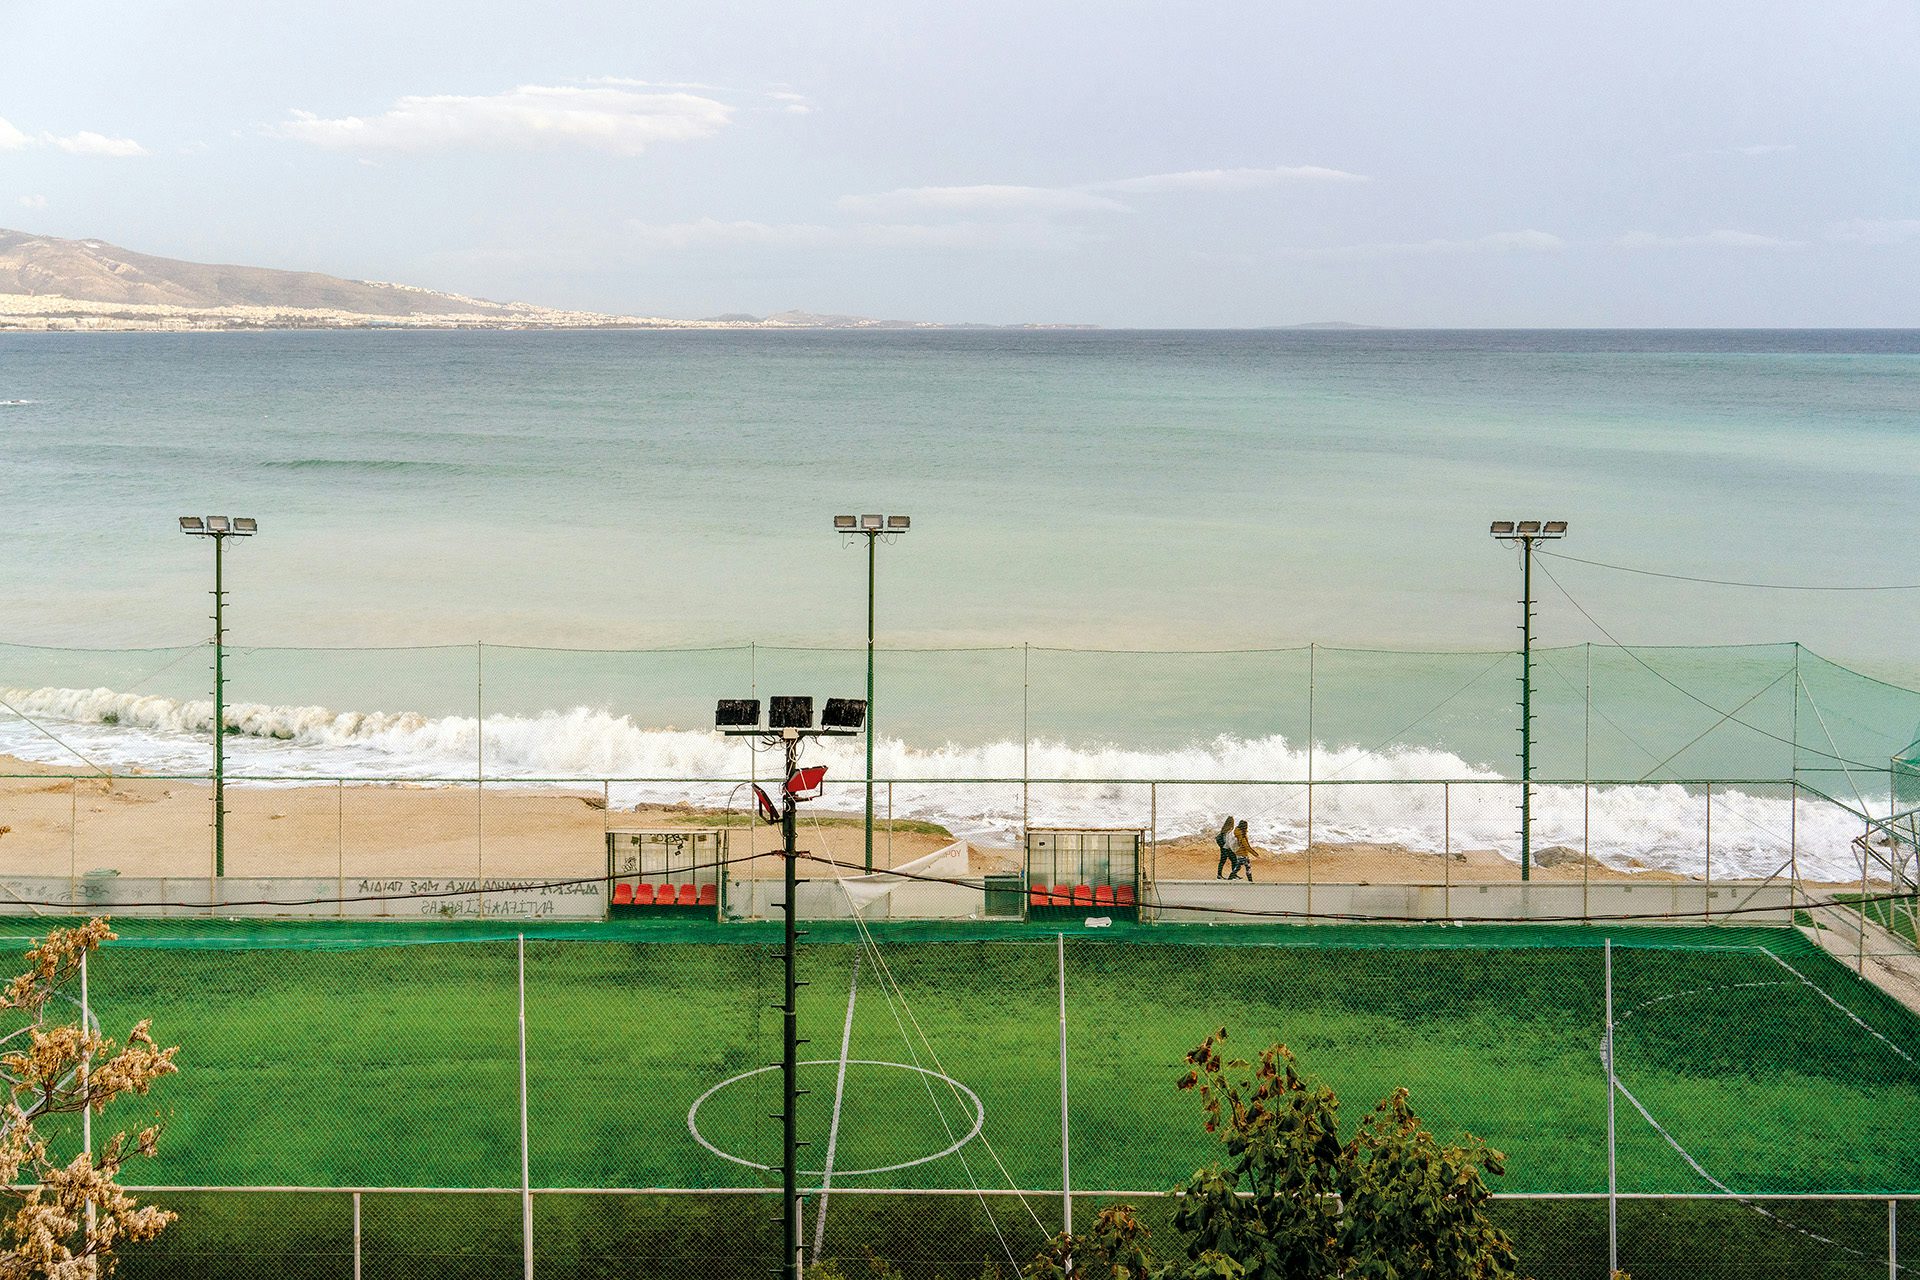 Image by Niko J. Kallianiotis shows a grassy sports field overlooking the coastline of Athens